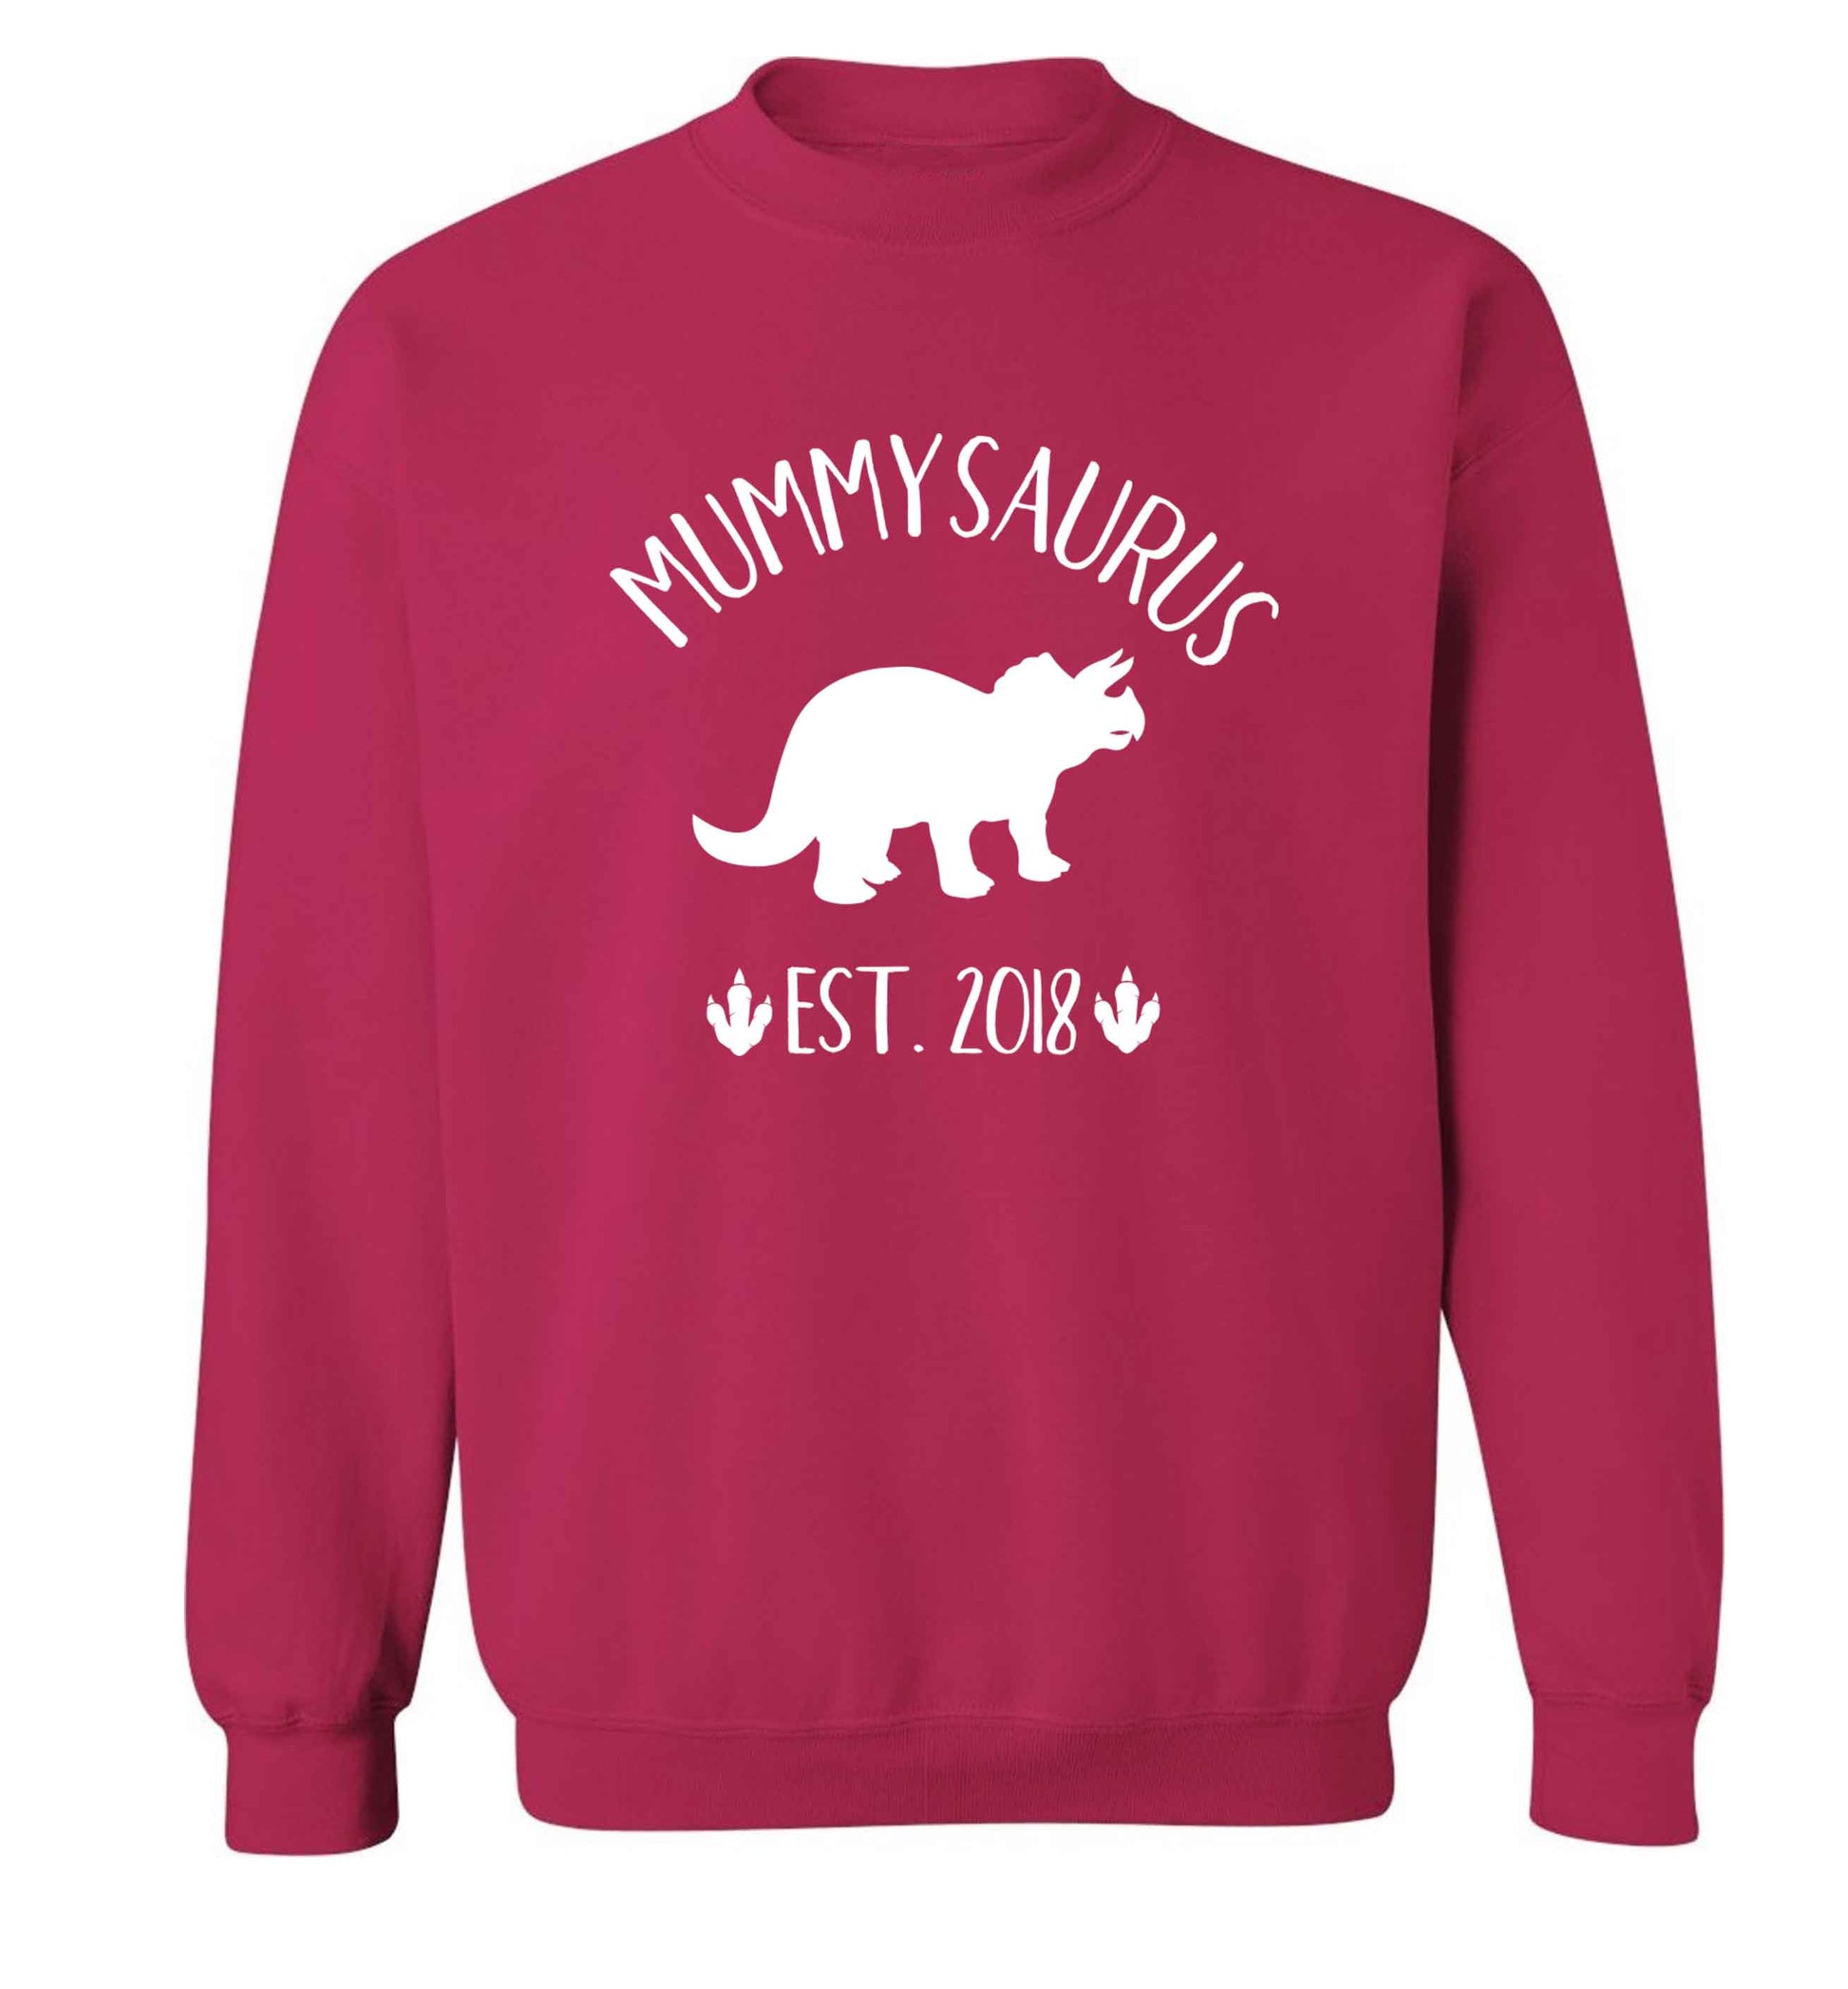 Personalised mummysaurus date adult's unisex pink sweater 2XL